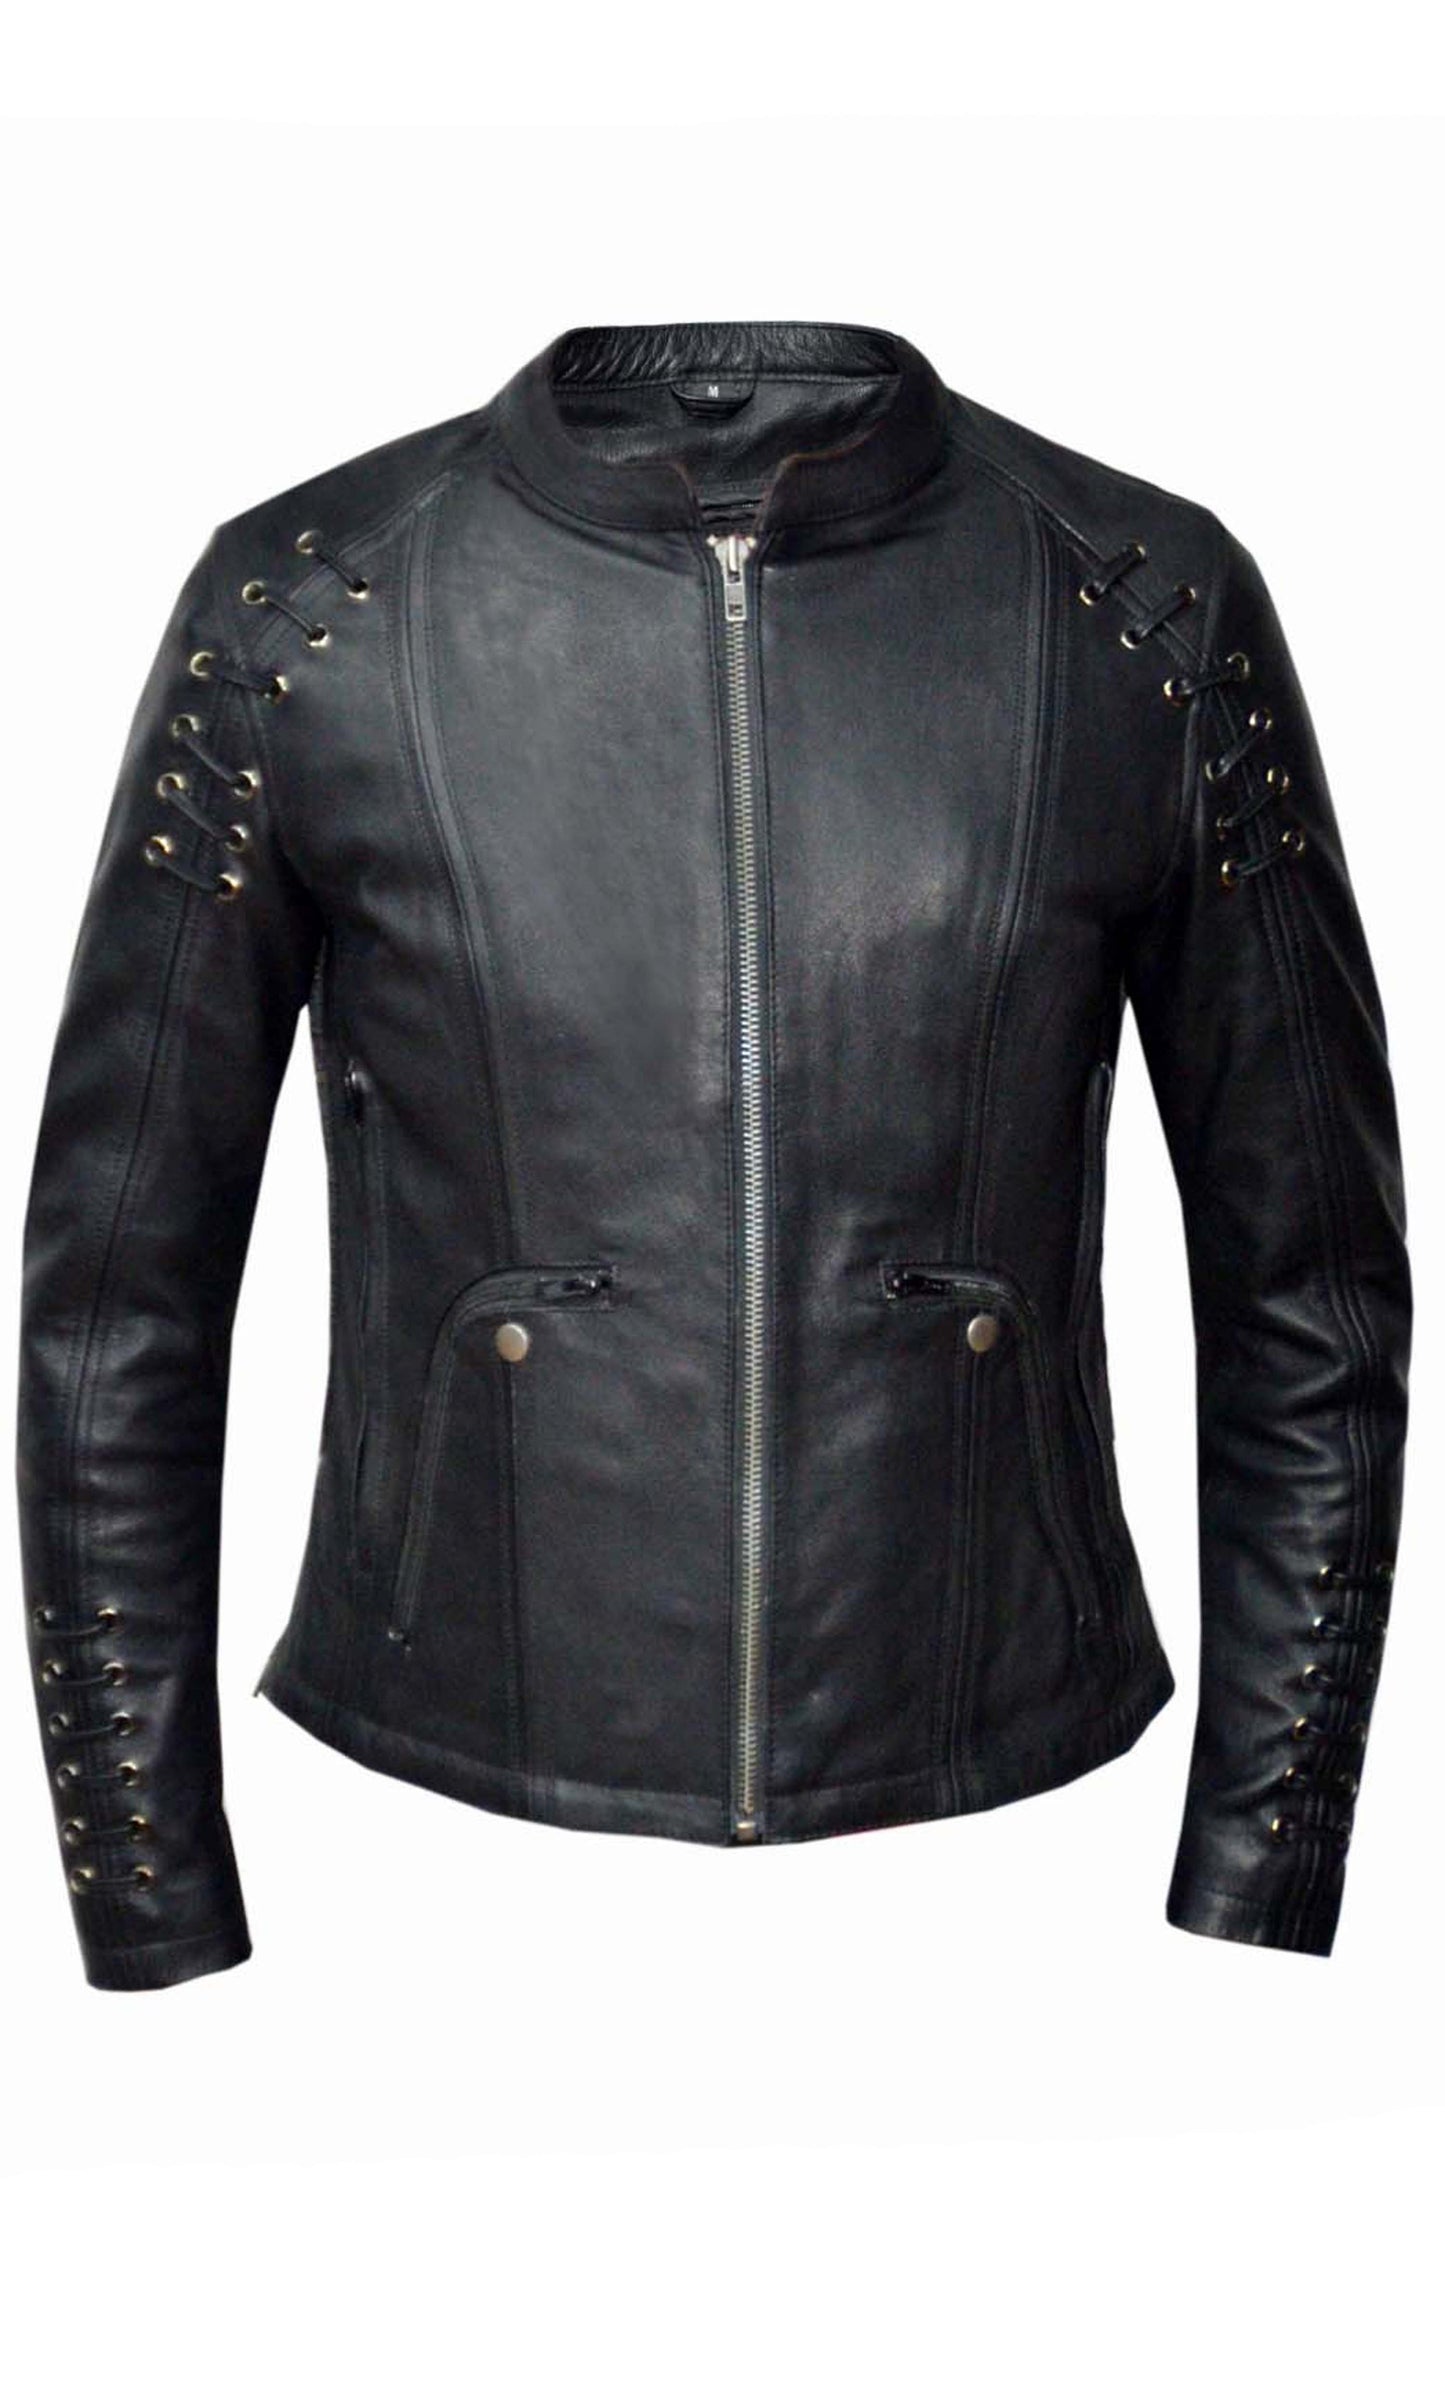 6564.00- Ladies Lambskin Leather Jacket